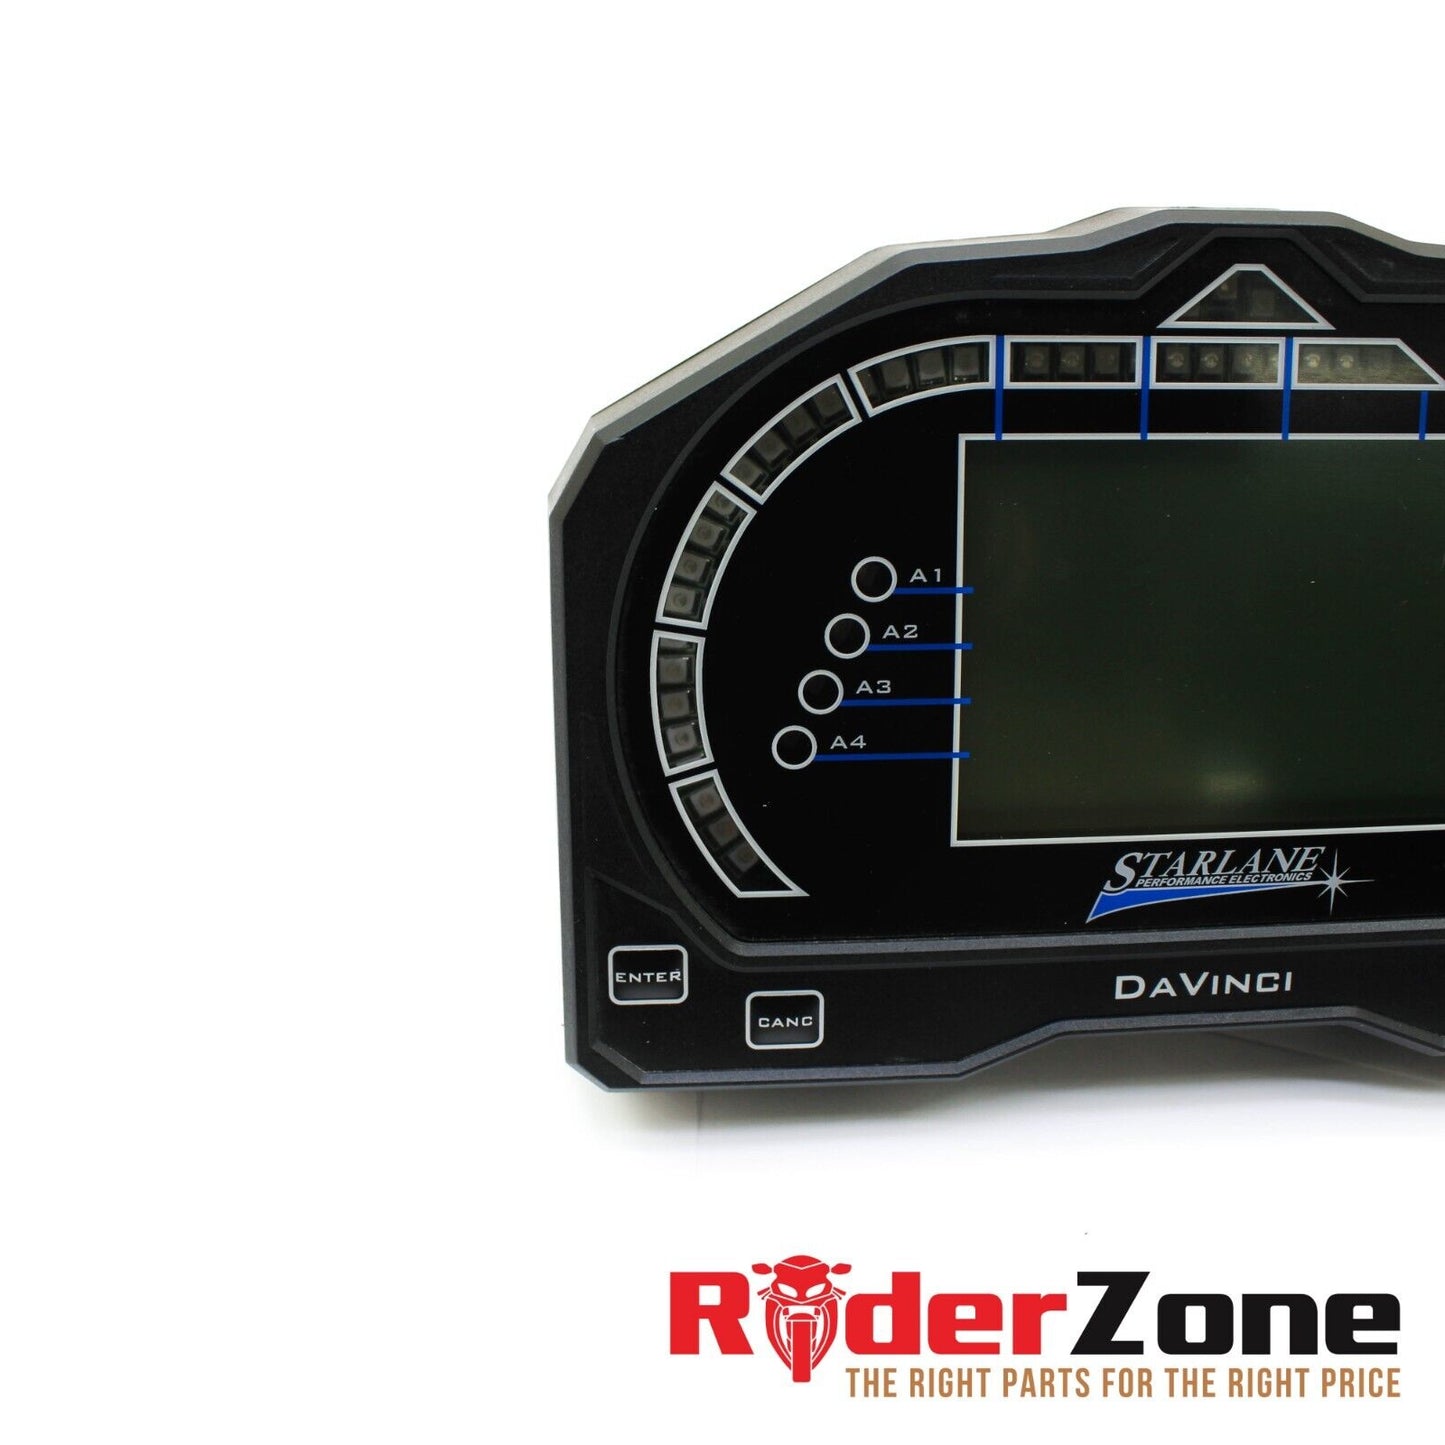 2010 - 2014 APRILIA RSV4 R STARLANE SPEEDOMETER DAVINCI DIGITAL GPS TRACKER